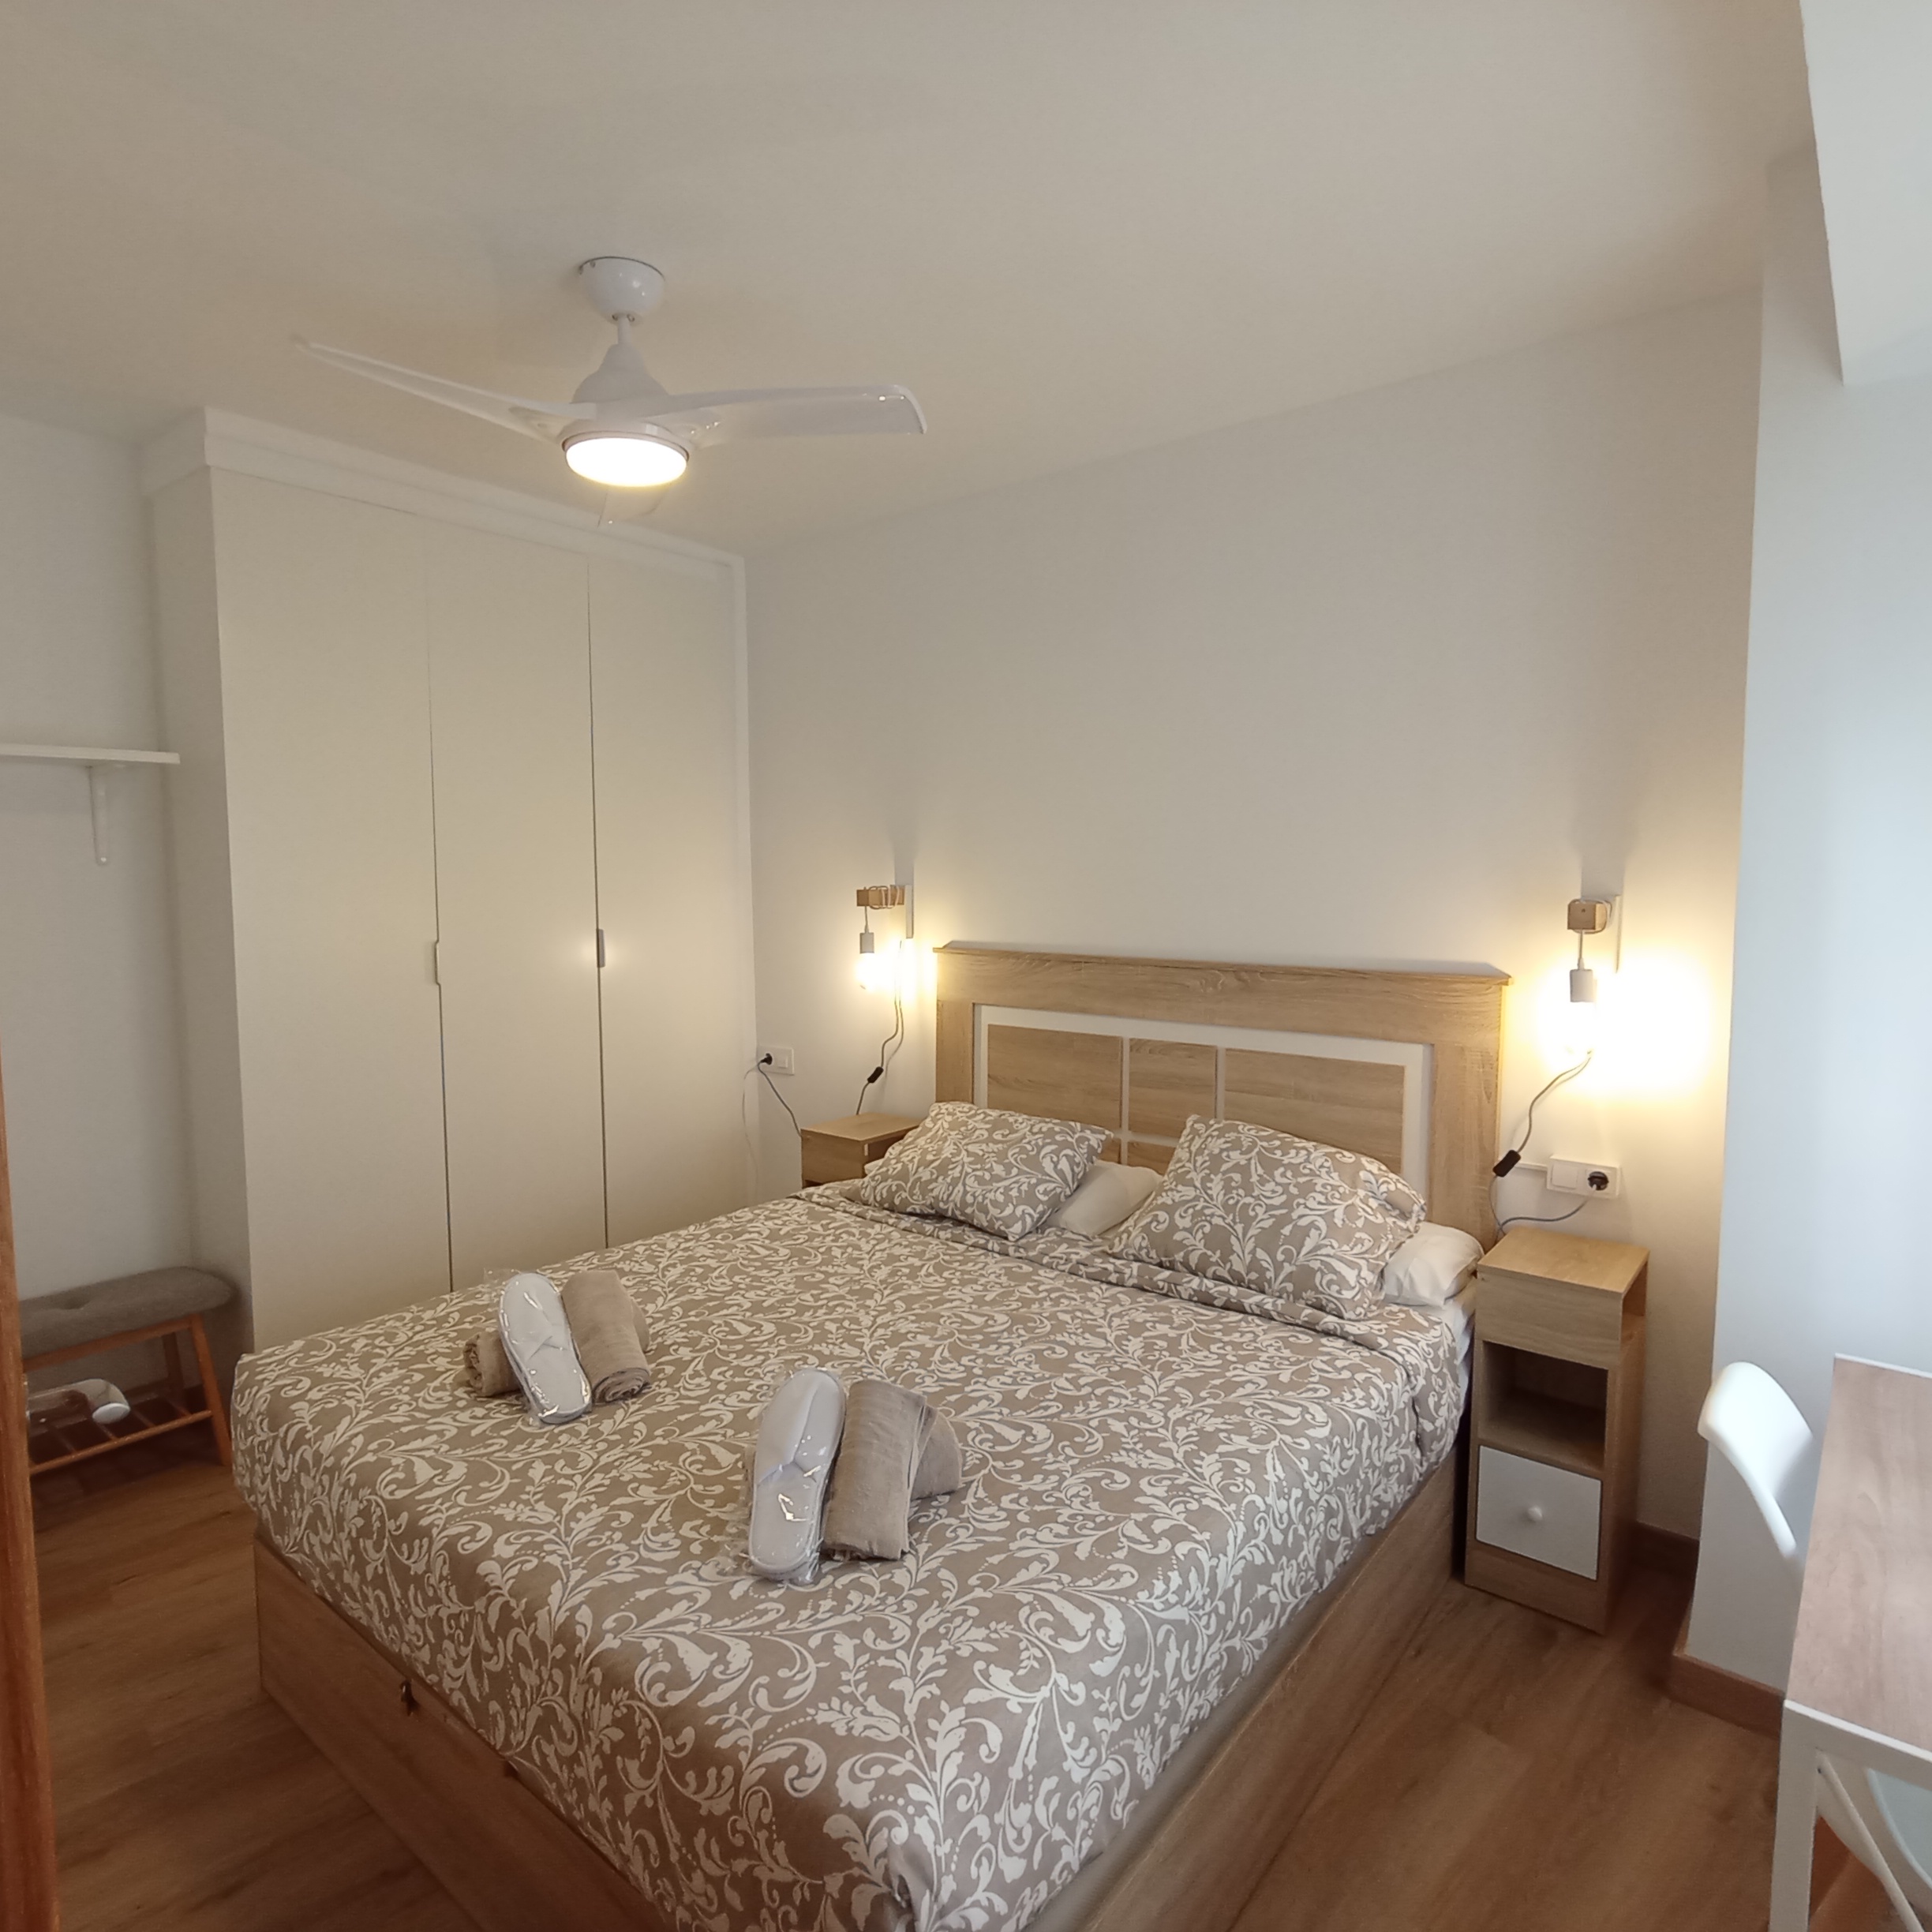 Trafalgar - 3 Bedroom apartment for rent in Valencia double bedroom